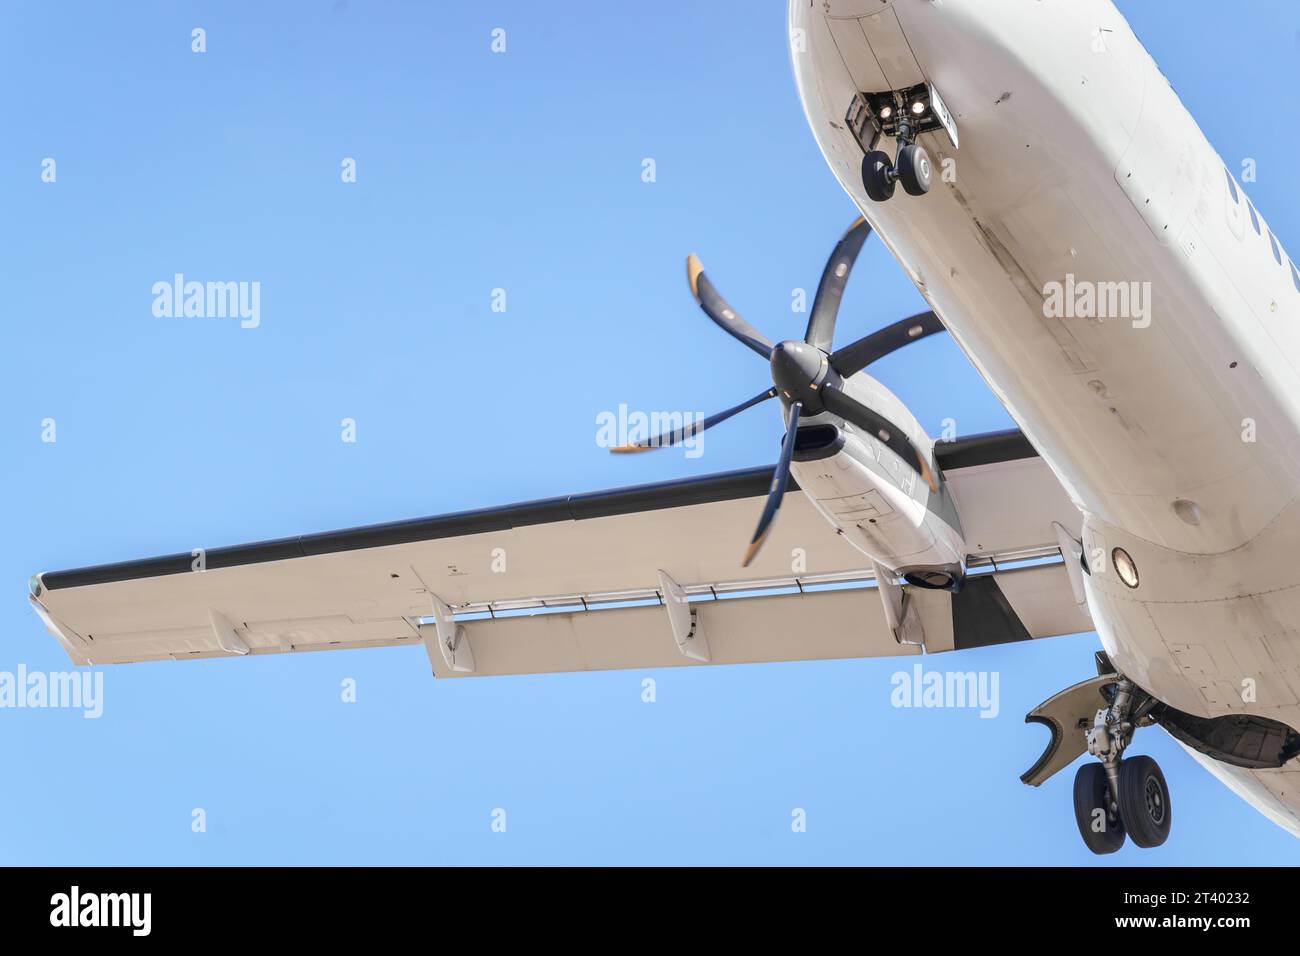 Details of an ATR 72 airplane, a twin-engine turboprop short-haul regional passenger aircraft. Landing airplane. Stock Photo